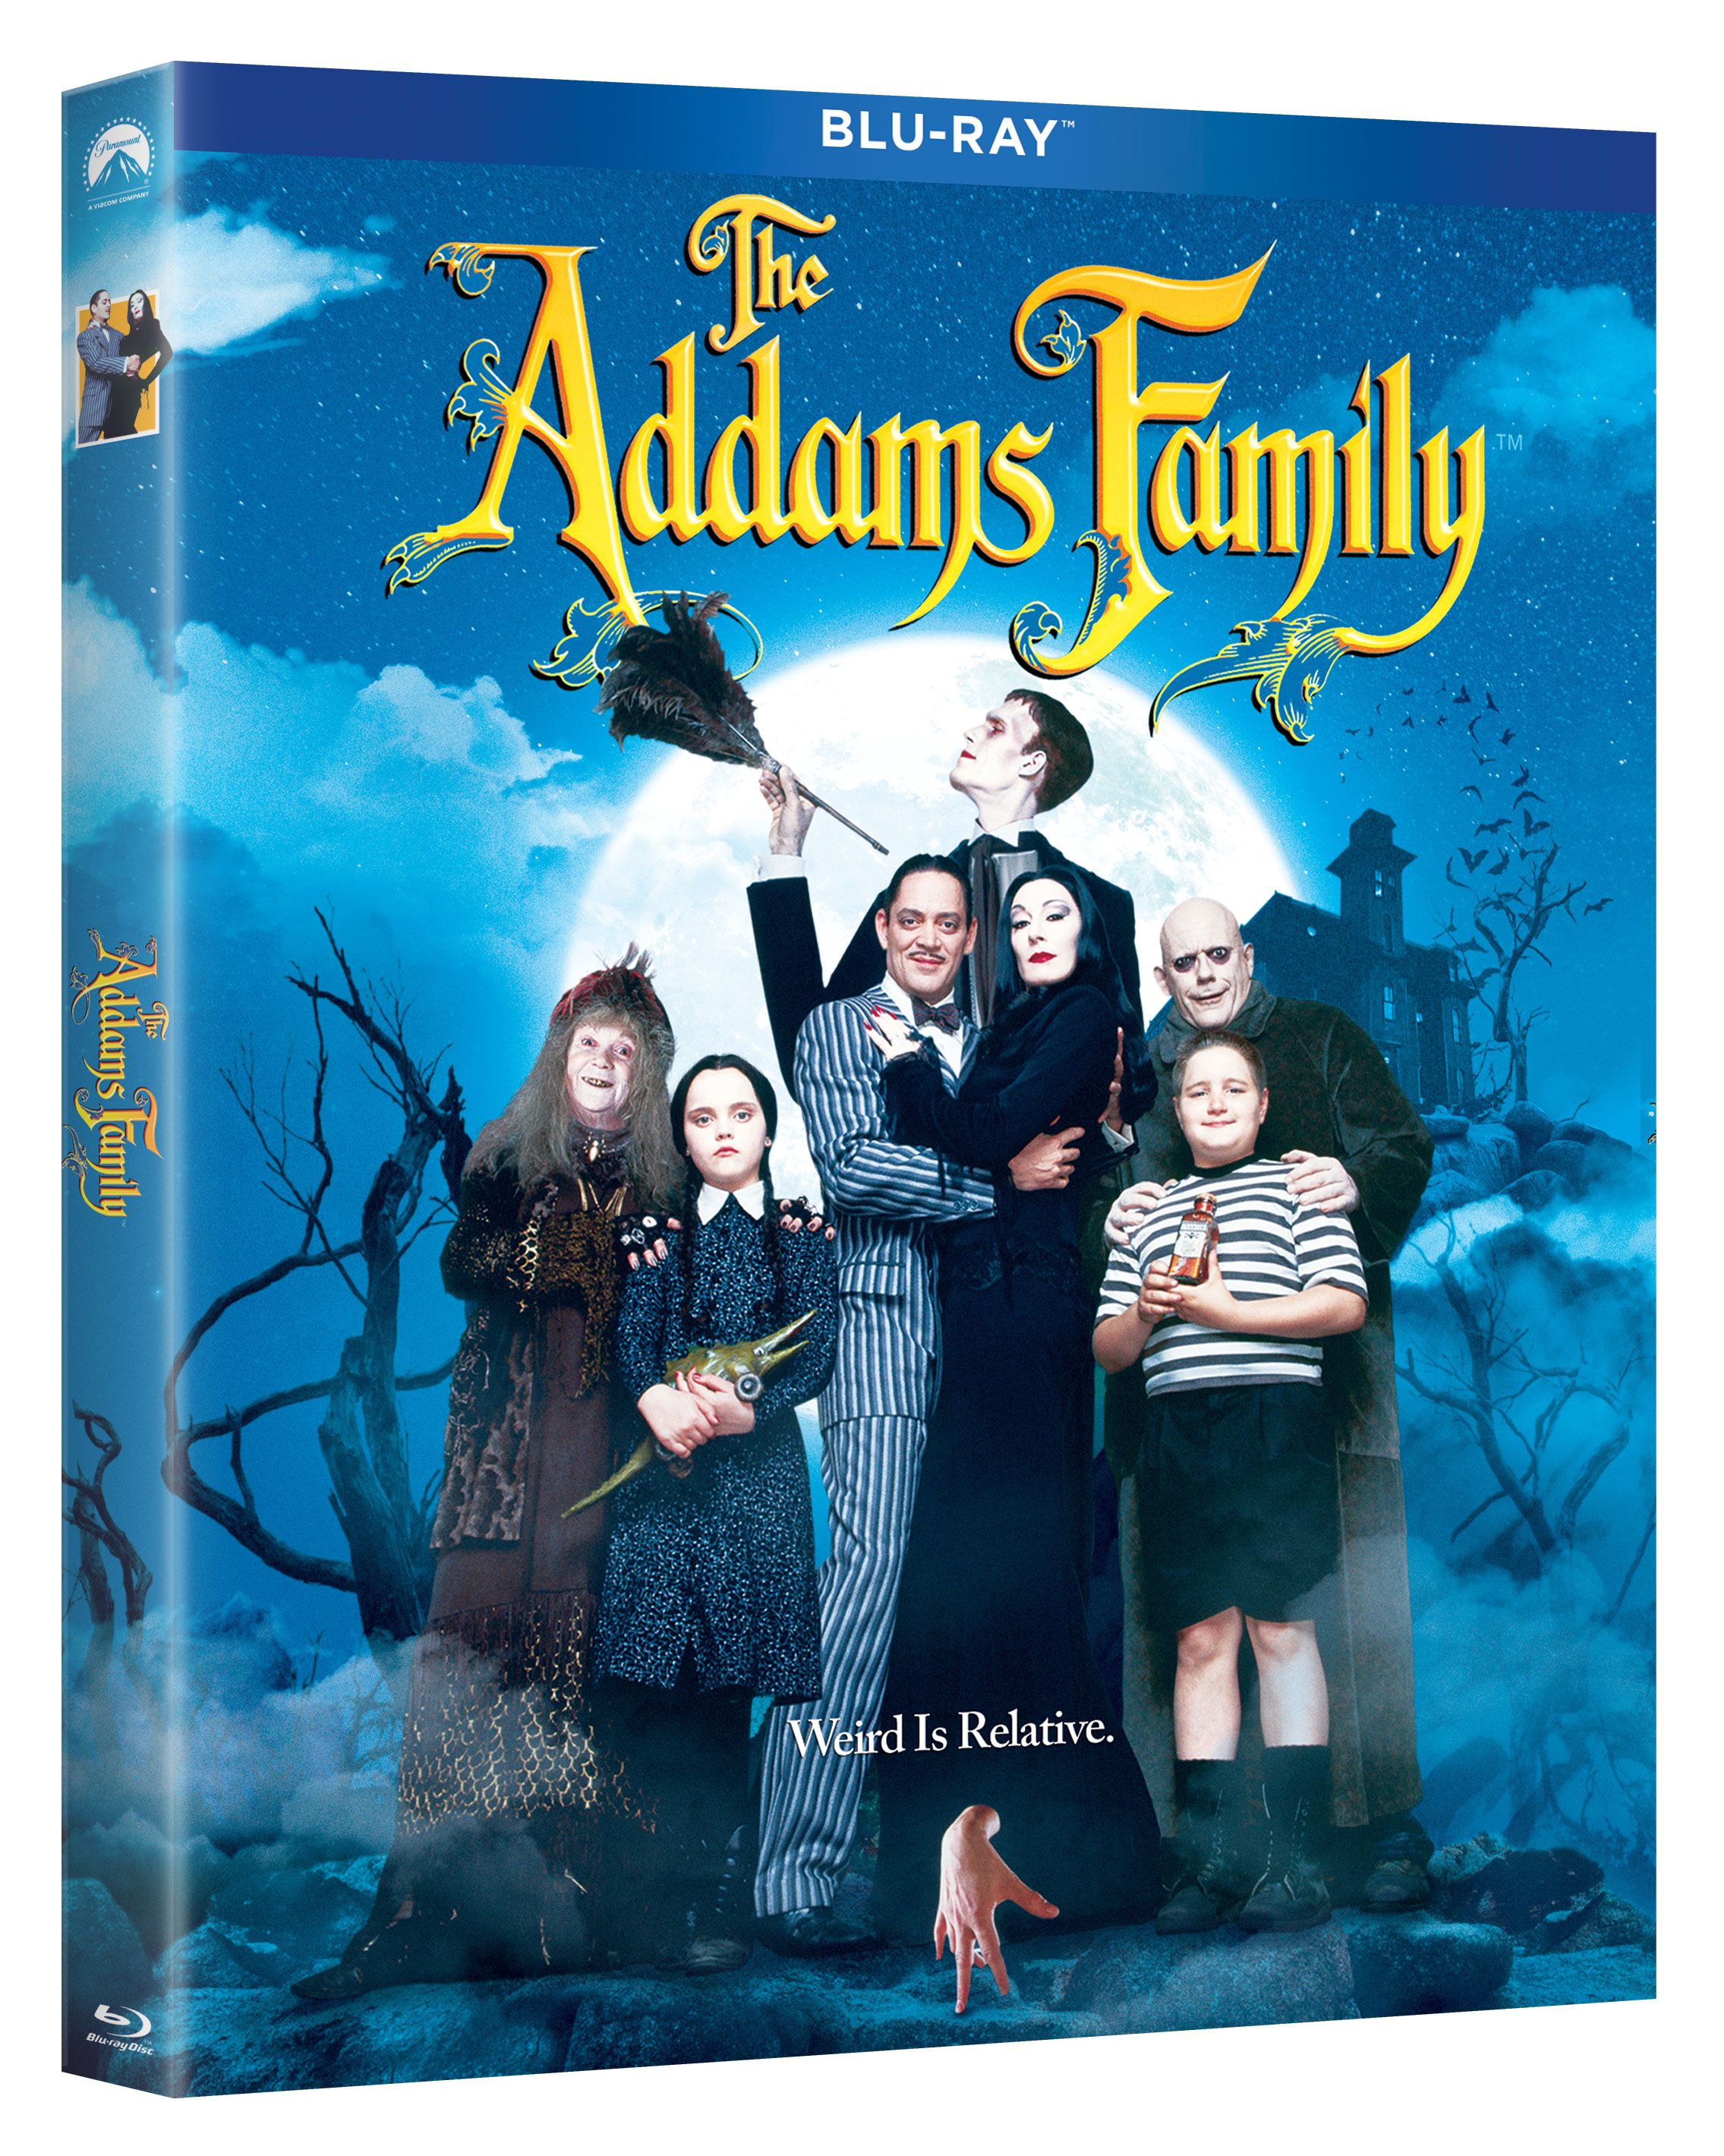 The Addams Family blu-ray 2019